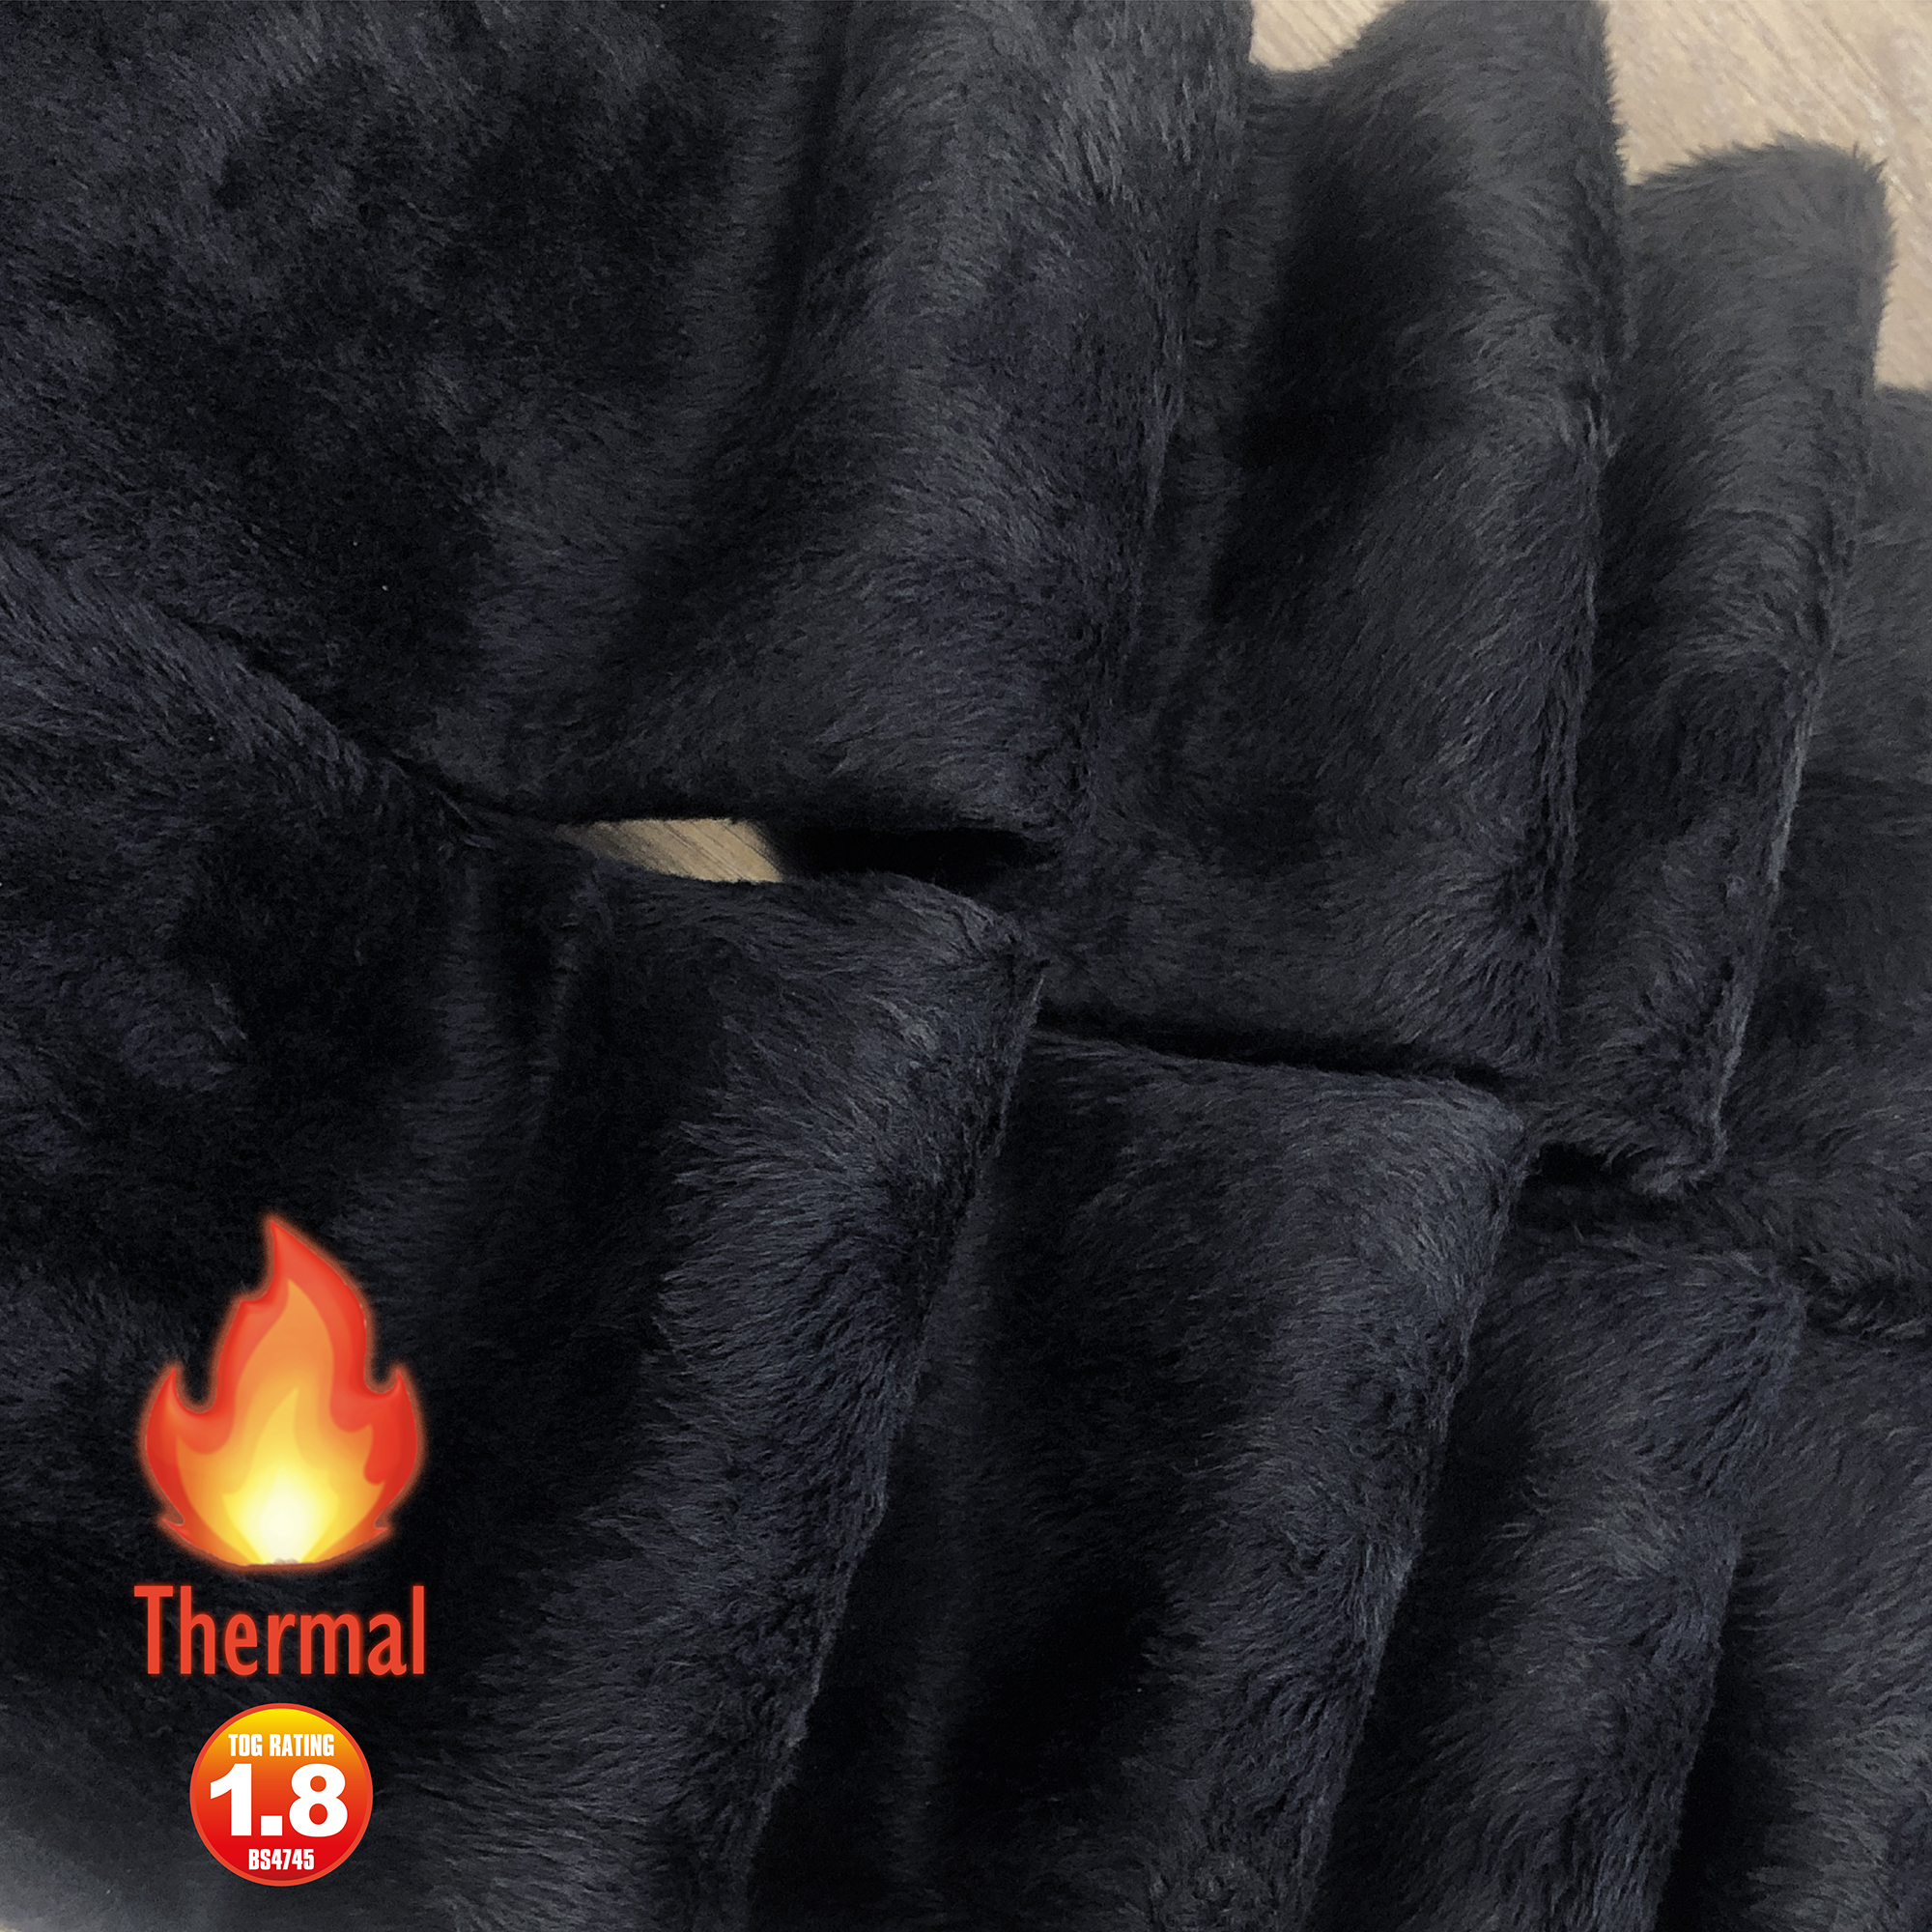 Ladies Thermal Fleece Leggings Heavy 1.8 Tog Soft Womens Winter Warm 1 Pair  S-L